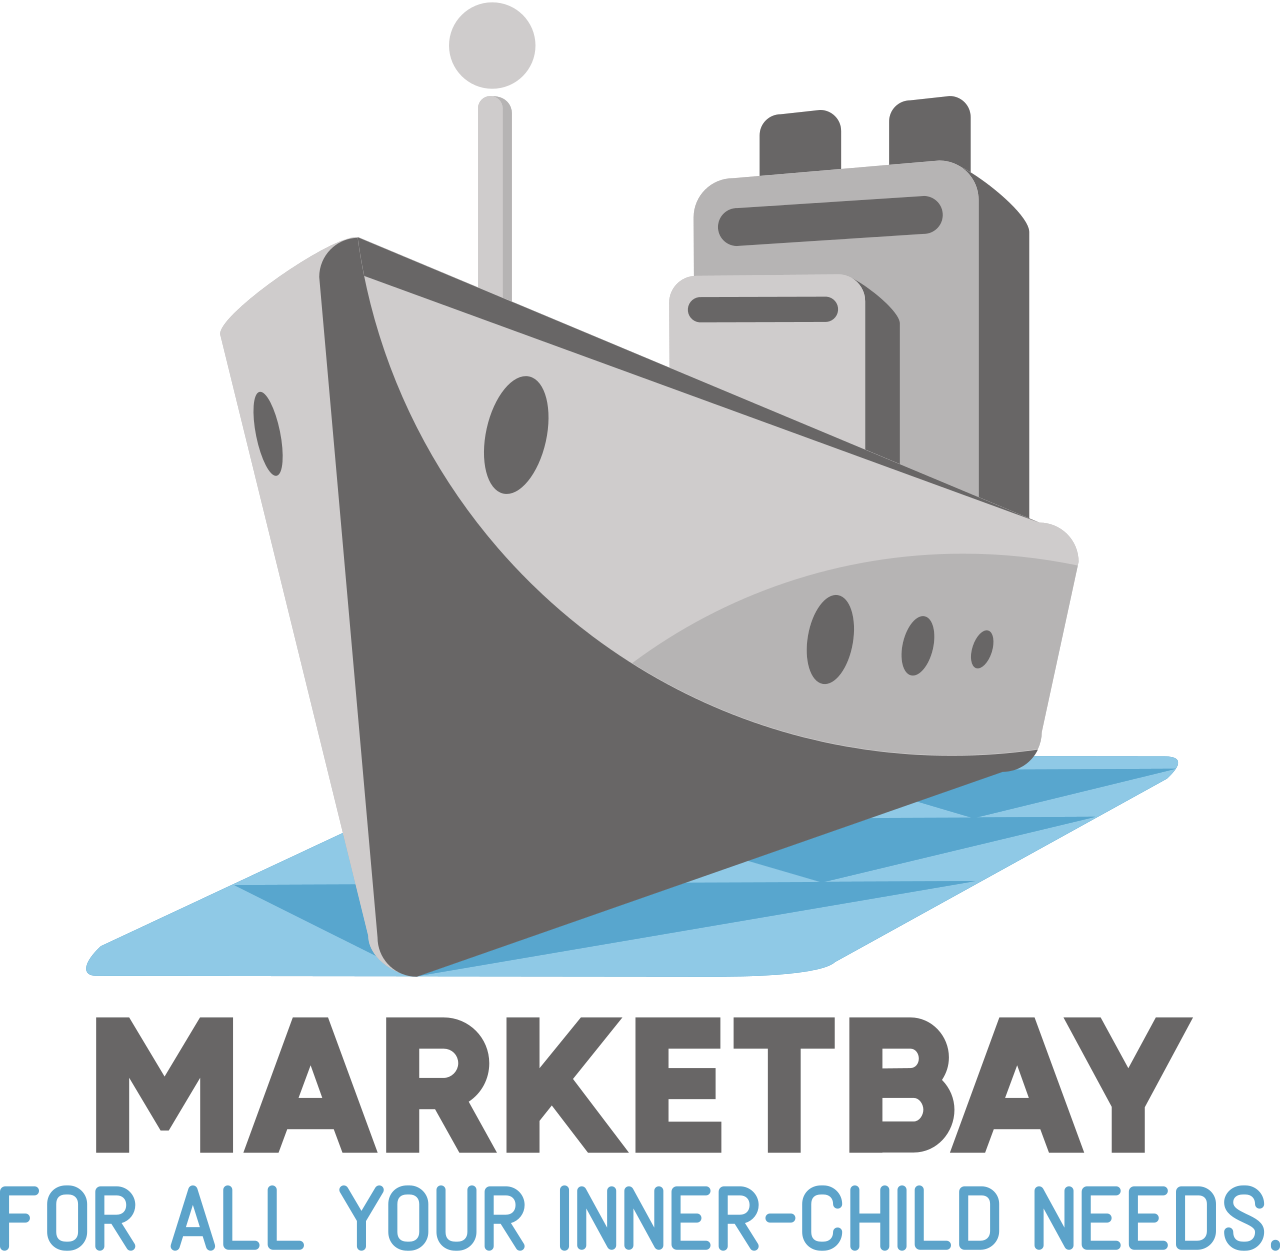 MarketBay's web page